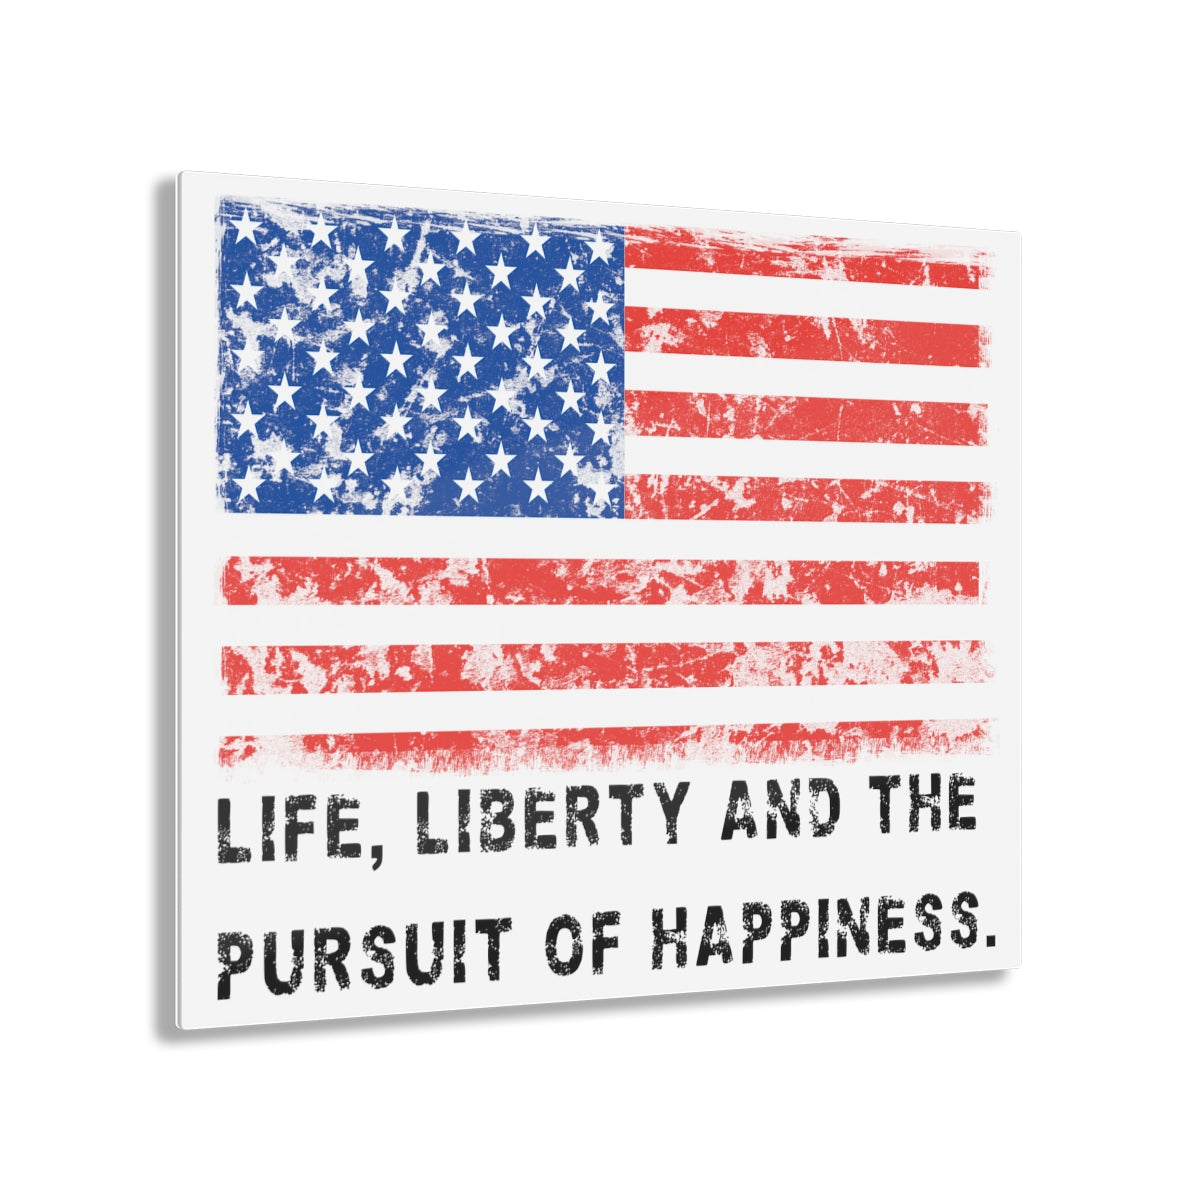 USA .: "Life, Liberty and the pursuit of Happiness" .: Acrylic Print